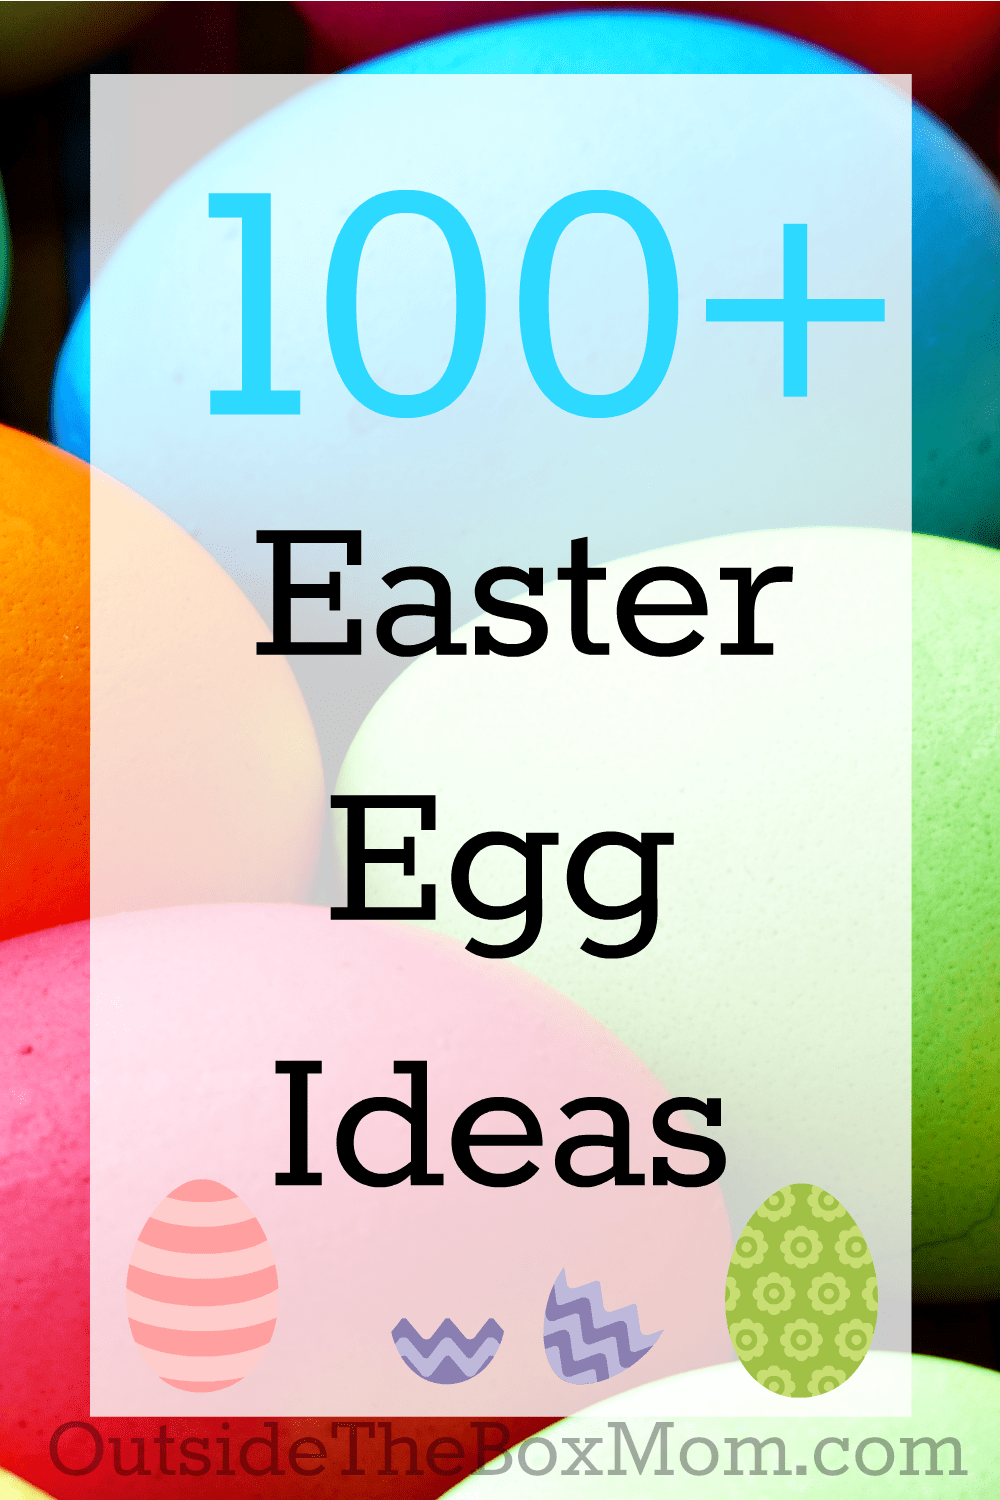 Easter egg ideas| OutsideTheBoxMom.com